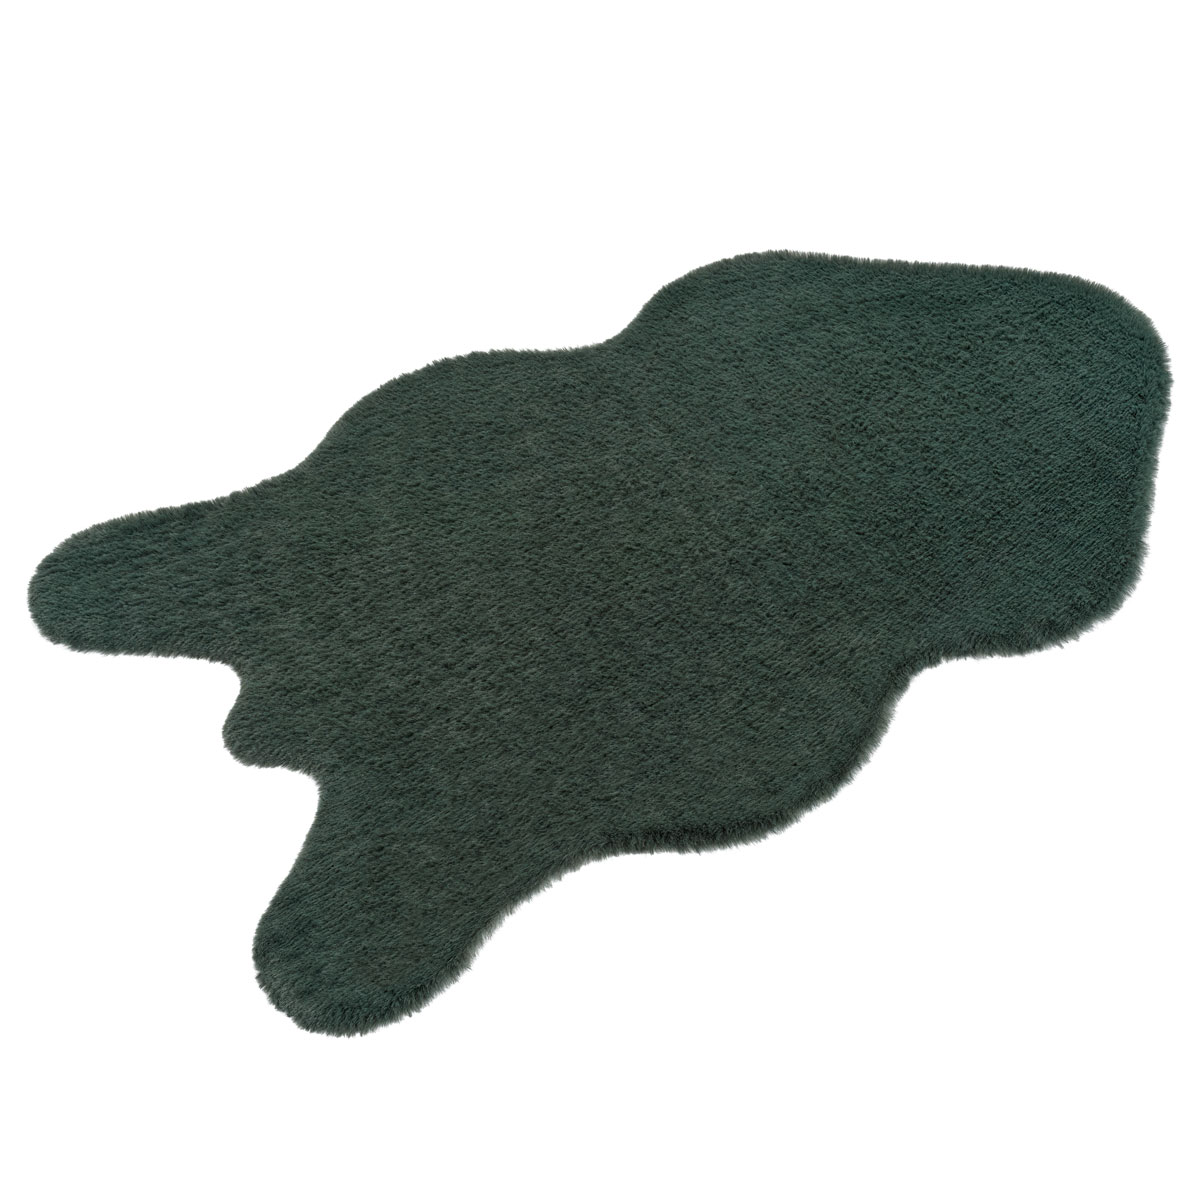 Коврик меховой шкура Shahintex 50х88см изумрудный Shahintex 819164, цвет зеленый